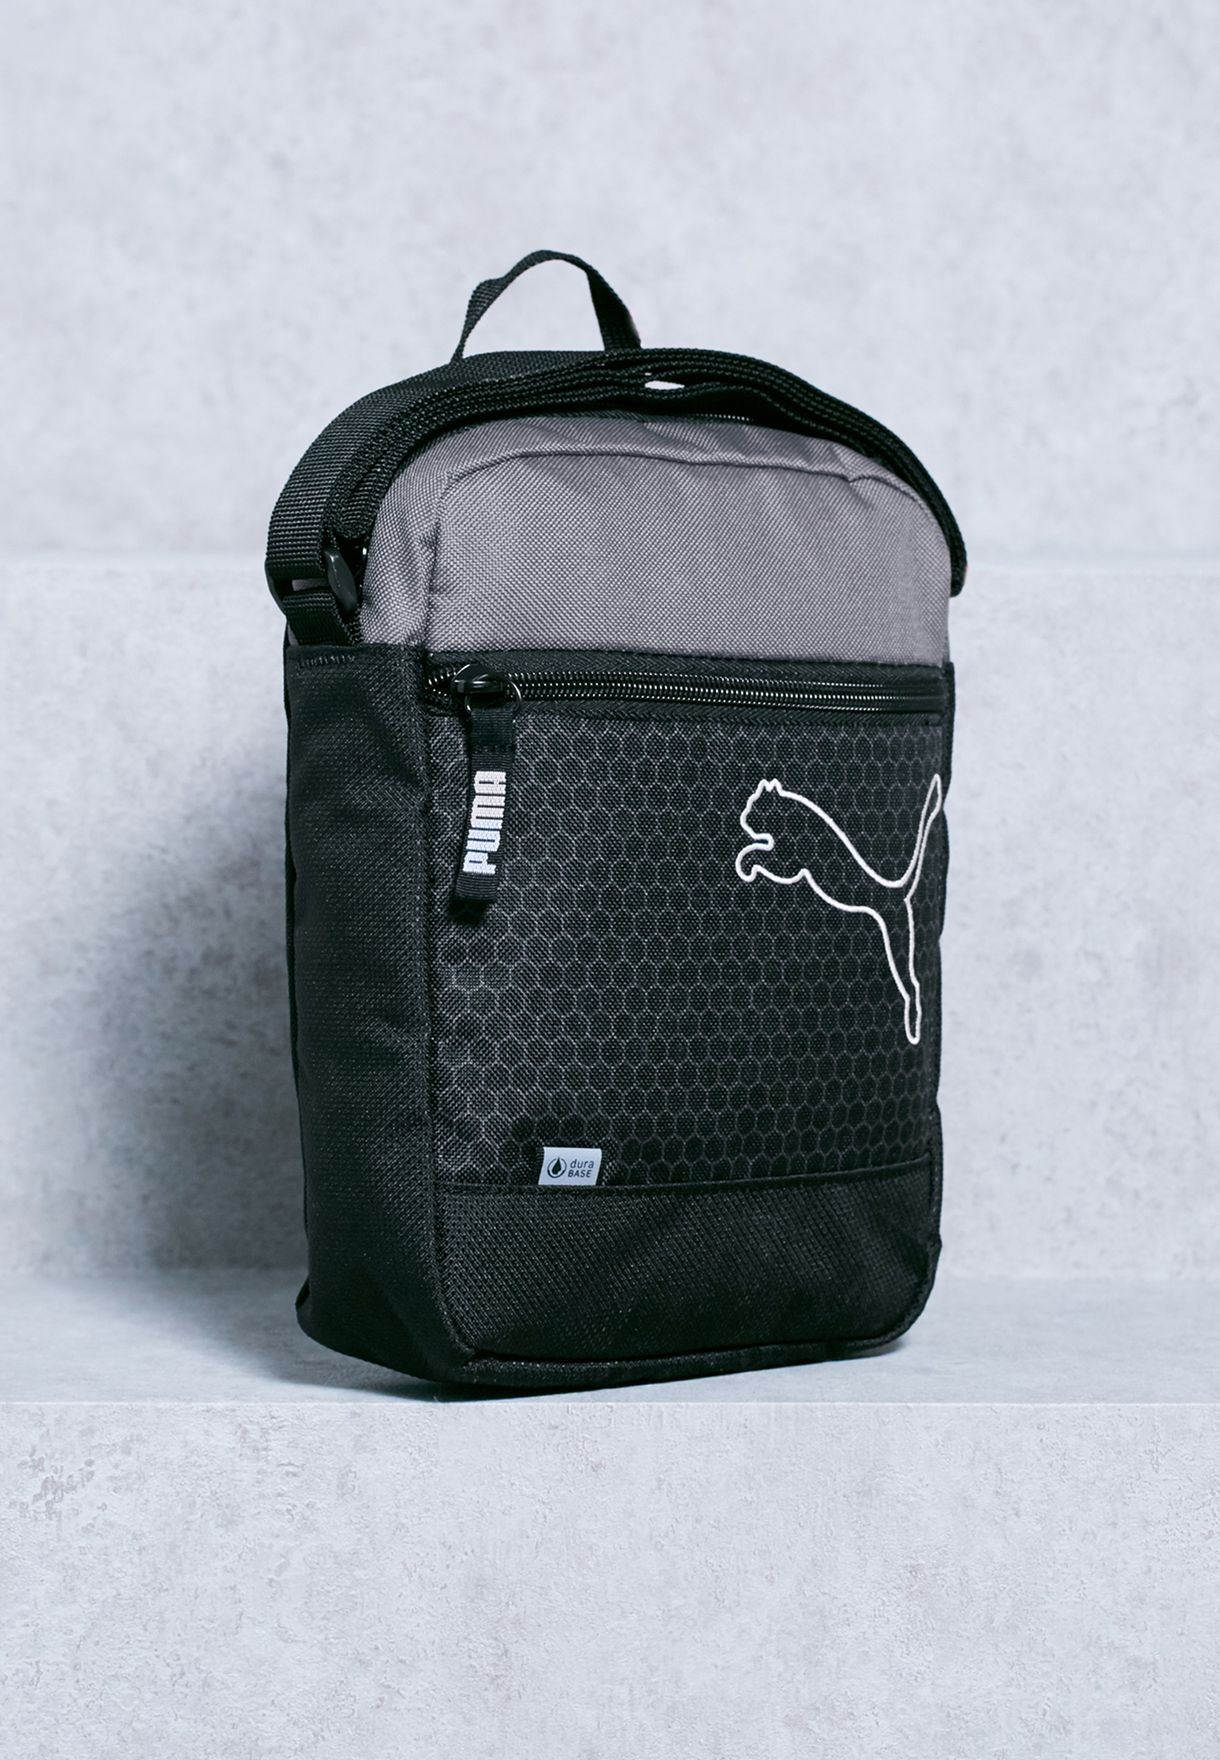 puma echo portable bag